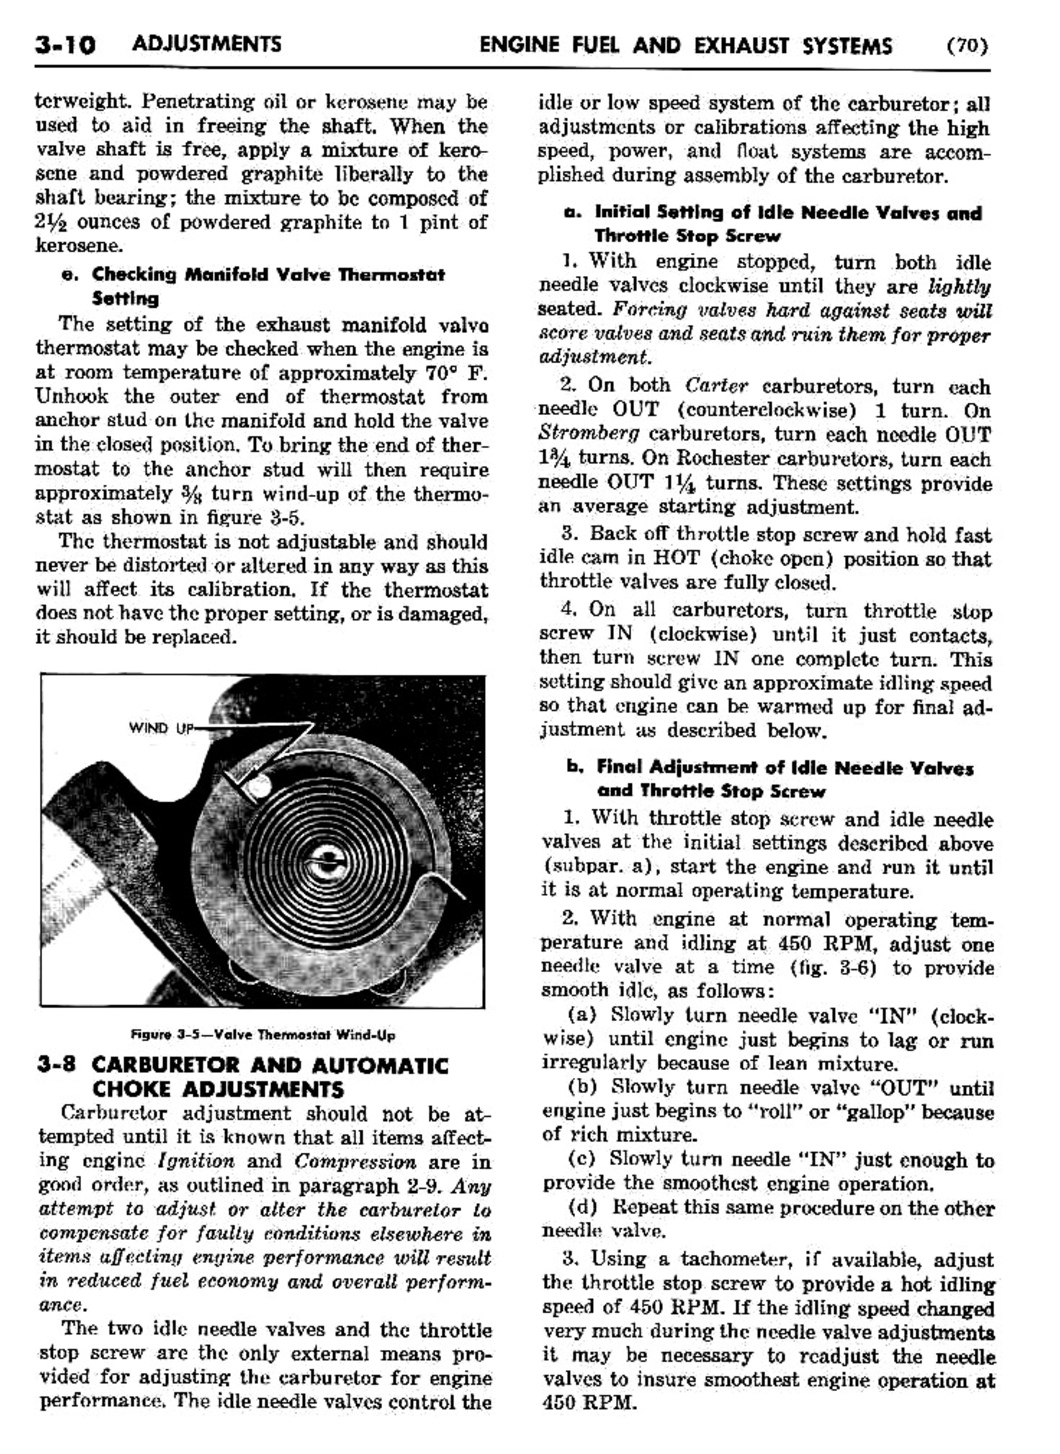 n_04 1956 Buick Shop Manual - Engine Fuel & Exhaust-010-010.jpg